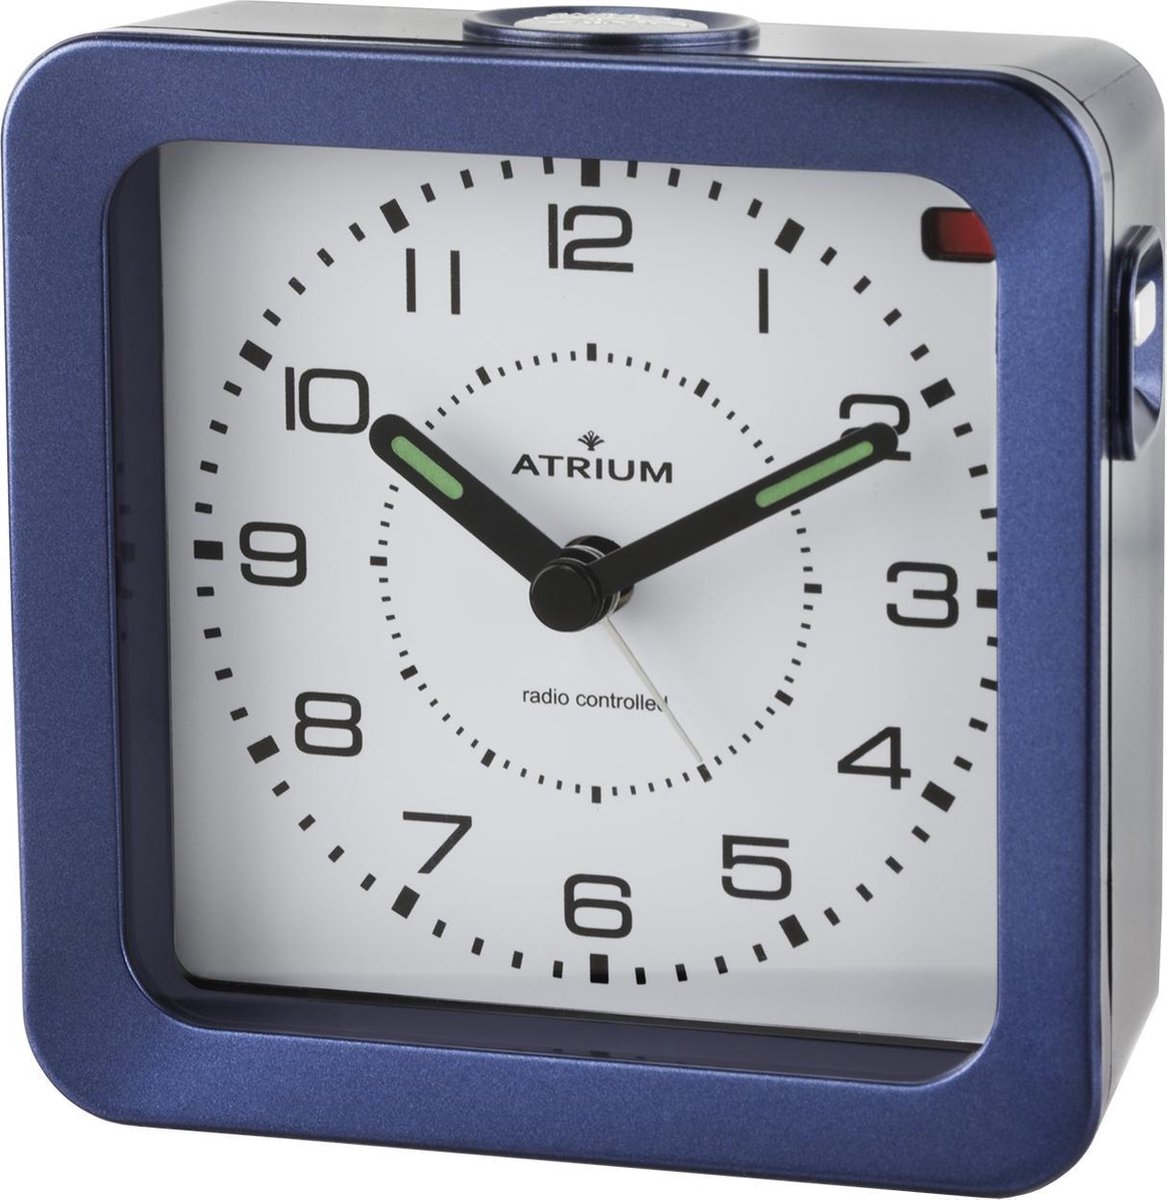 ATRIUM Wekker - Analoog - Radiogestuurd - Alarm - Blauw - Licht - Verlichte wijzers - Opbouwend Alarmsignaal - Snooze - Duidelijk - Quartz uurwerk - A660-5